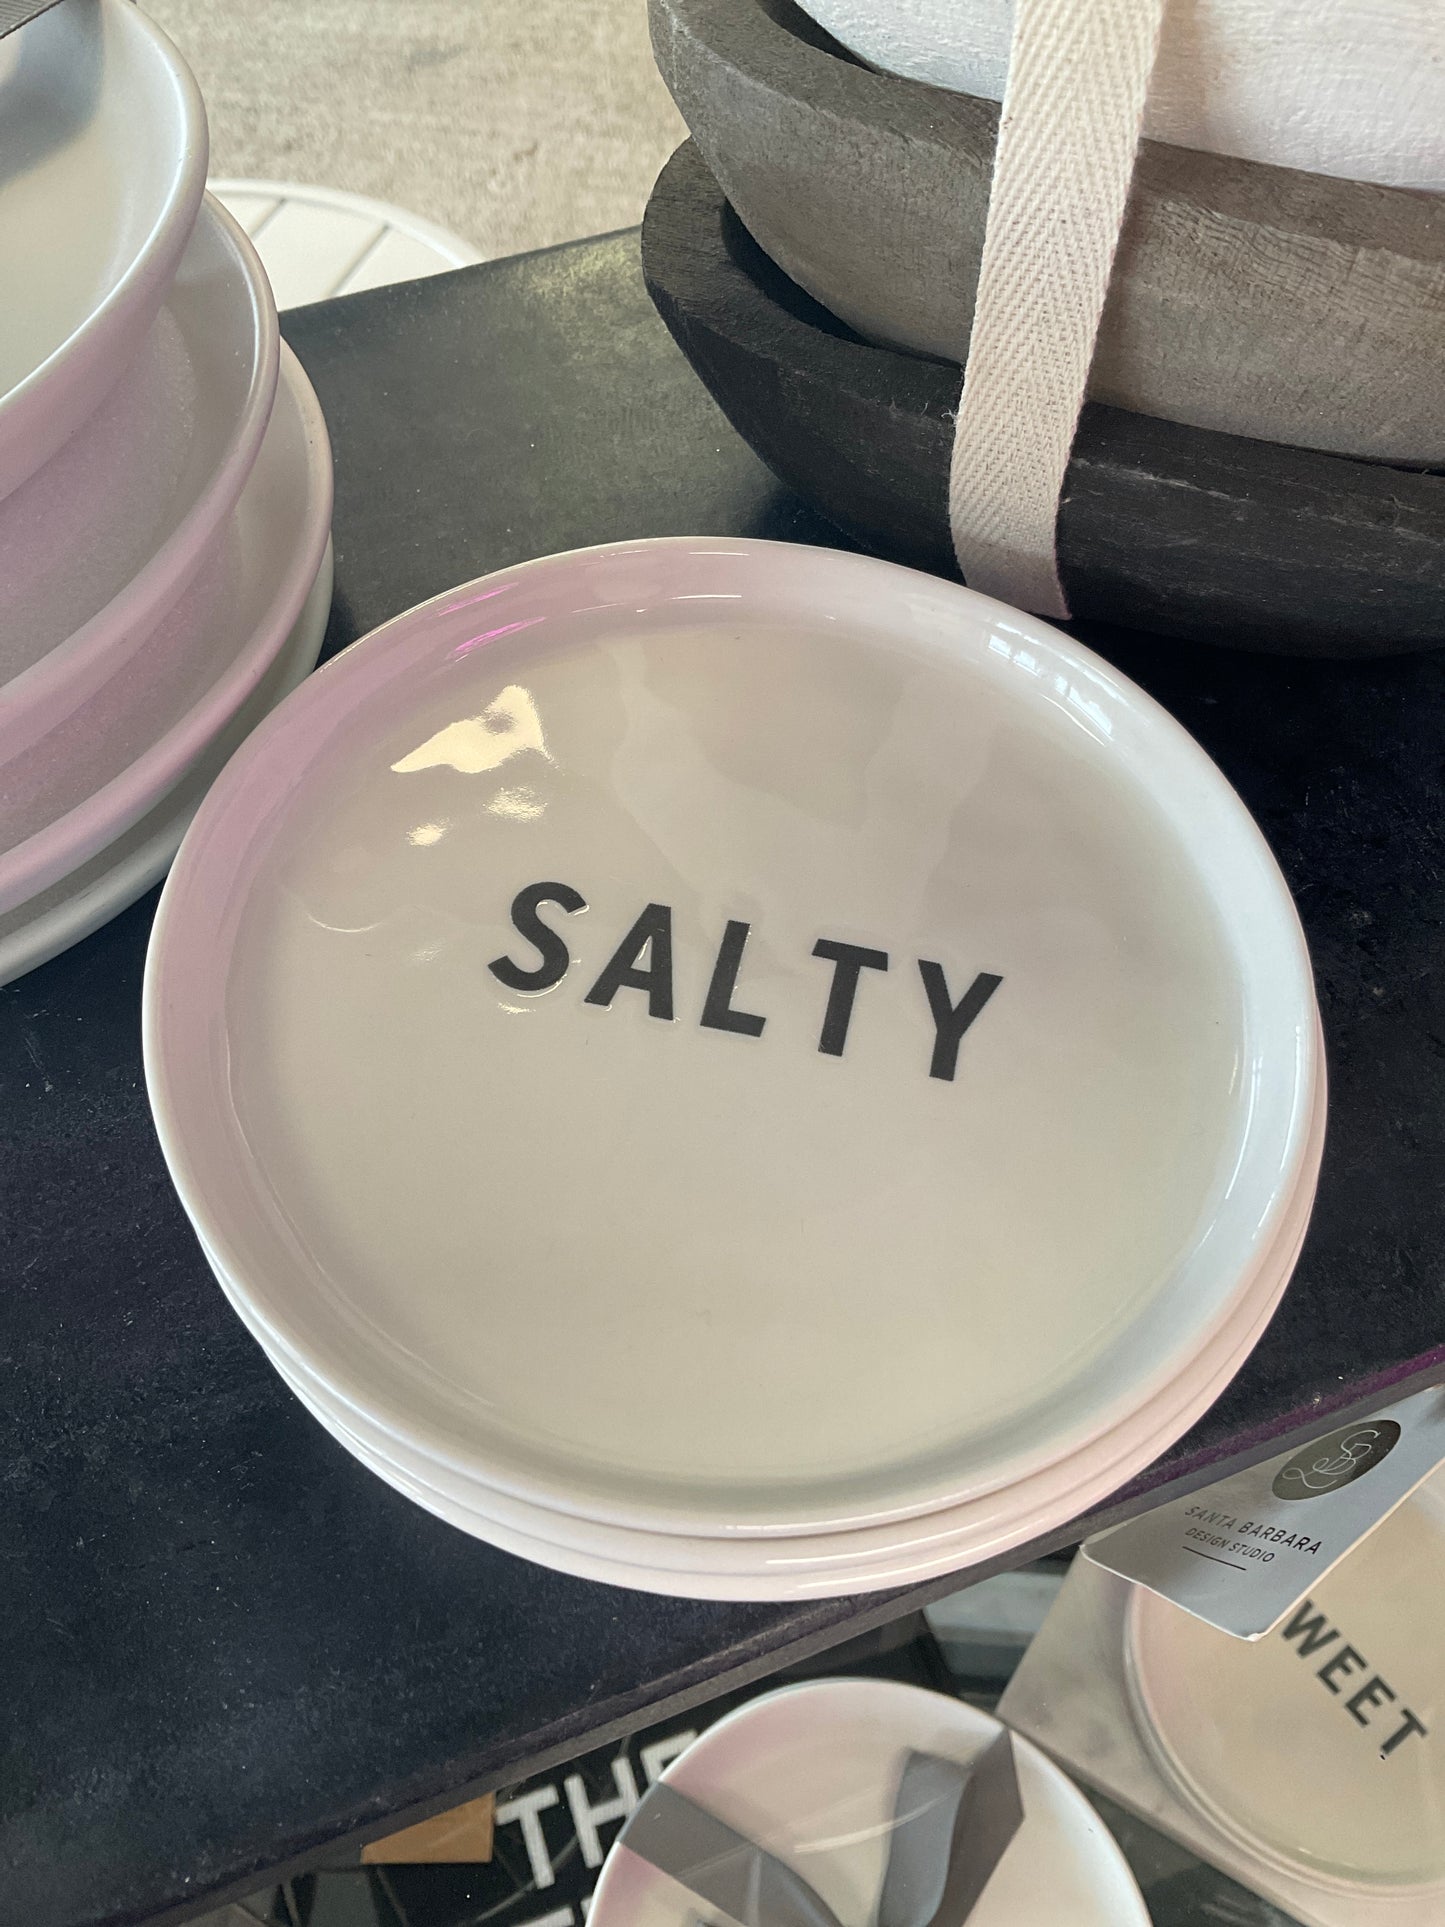 Salty Appetizer dish